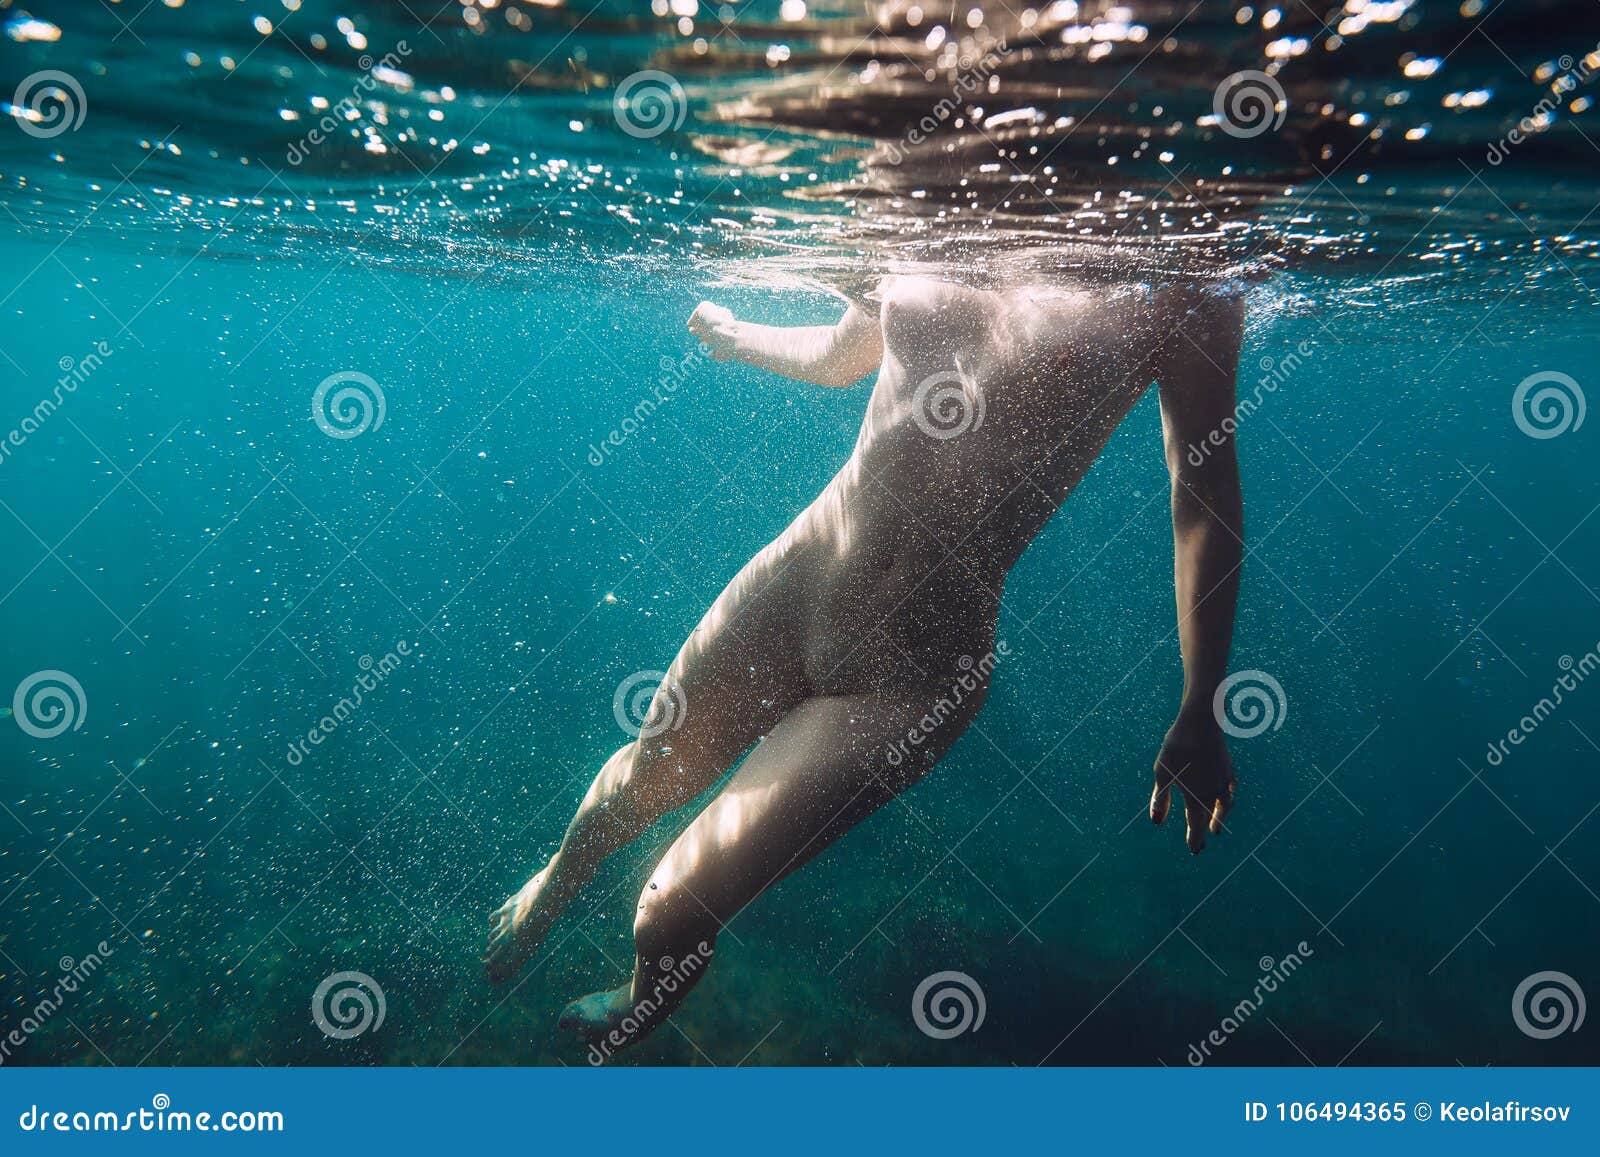 ali mahammad add photo nude women under water